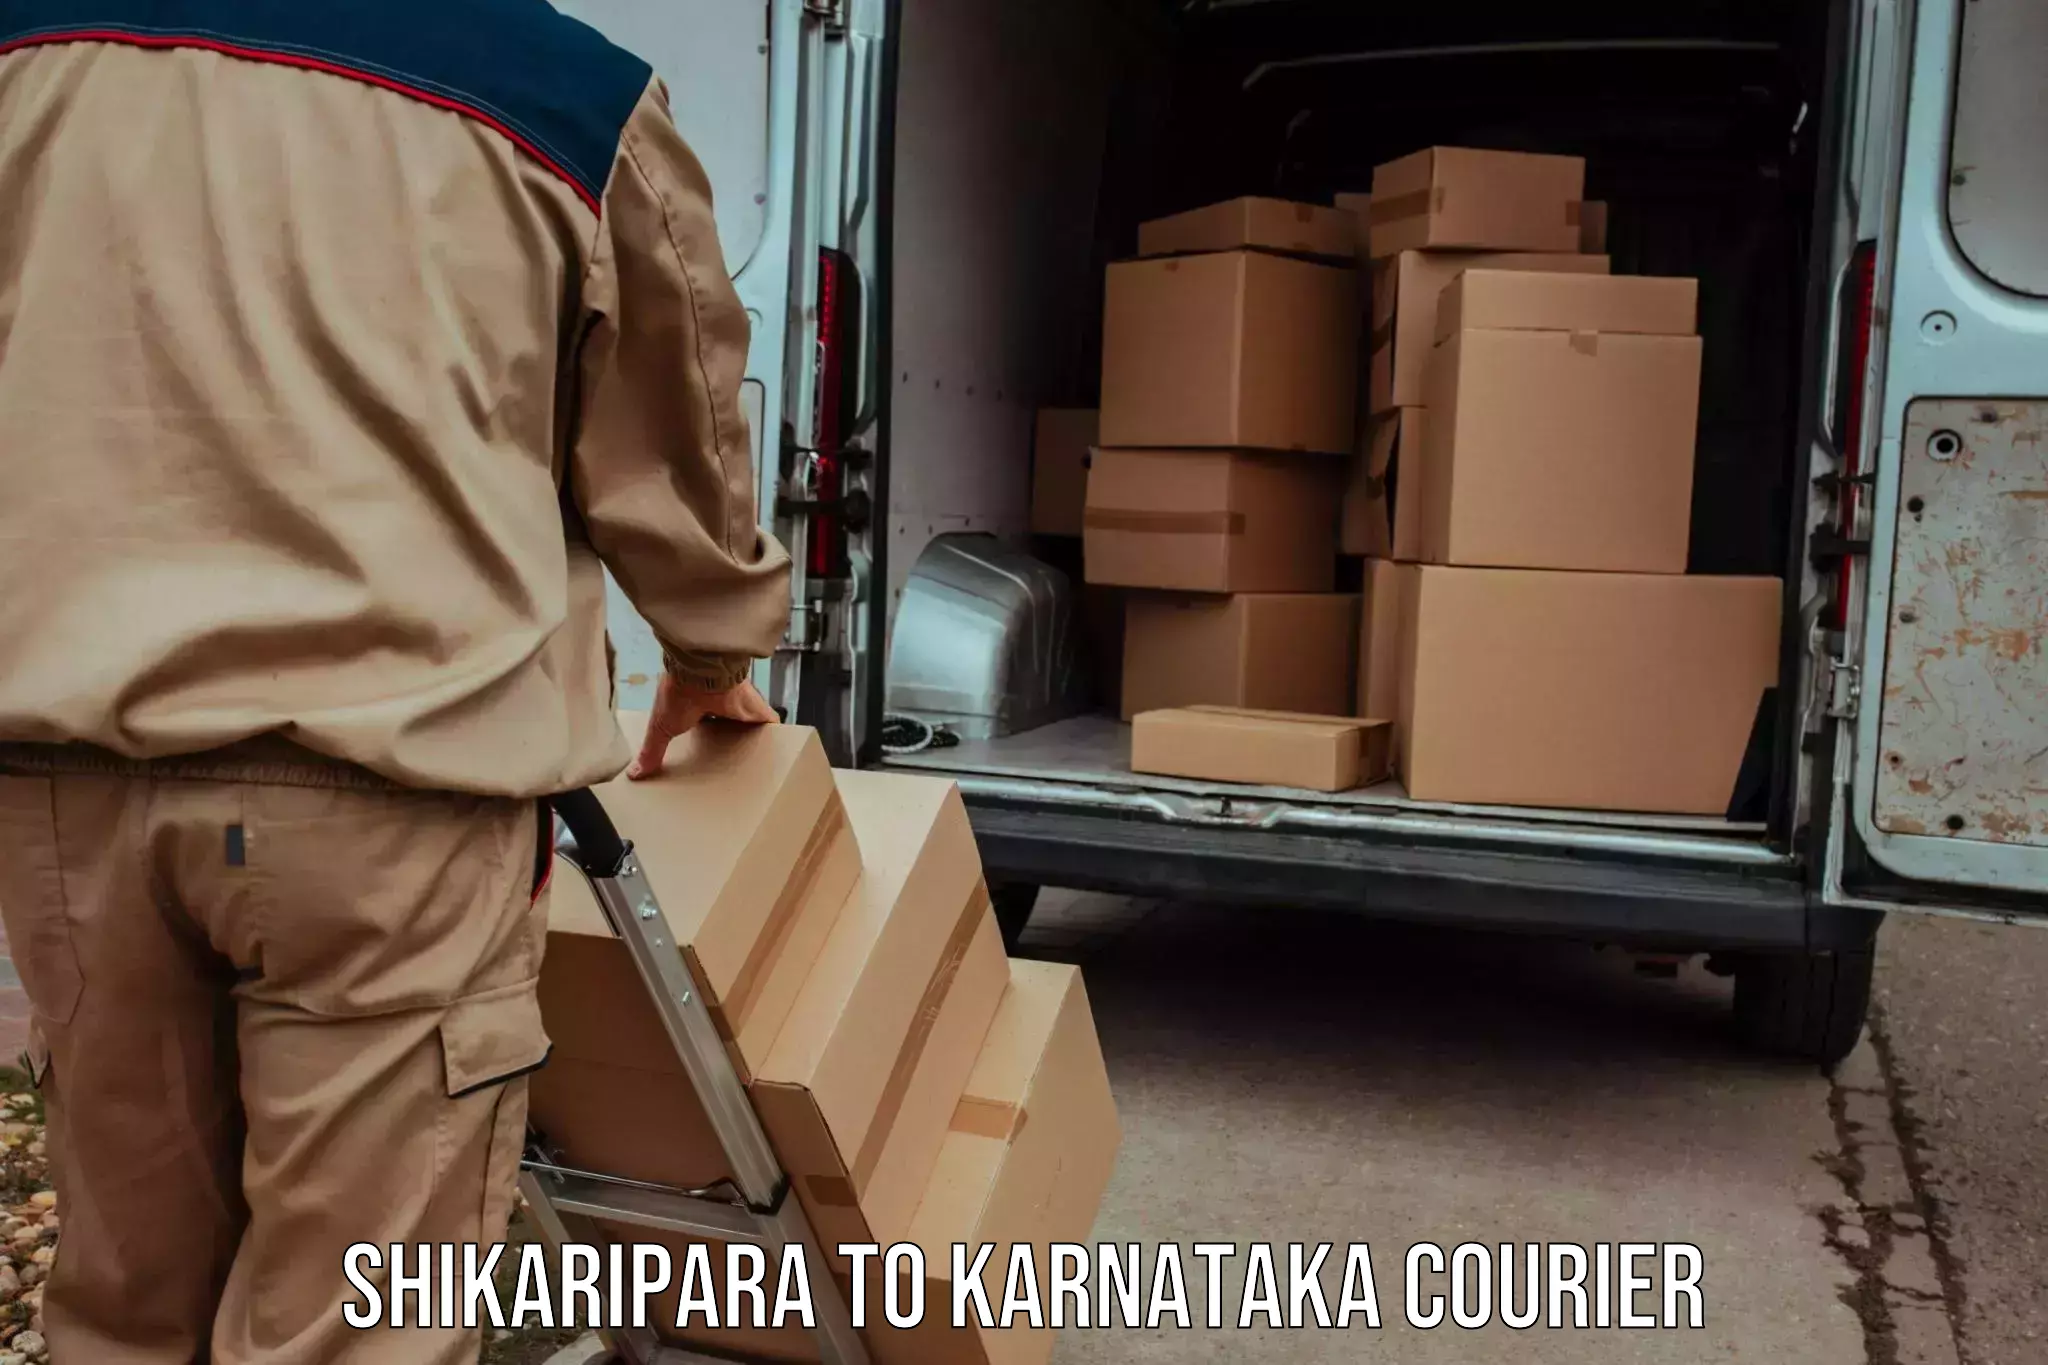 Local delivery service Shikaripara to Saraswathipuram